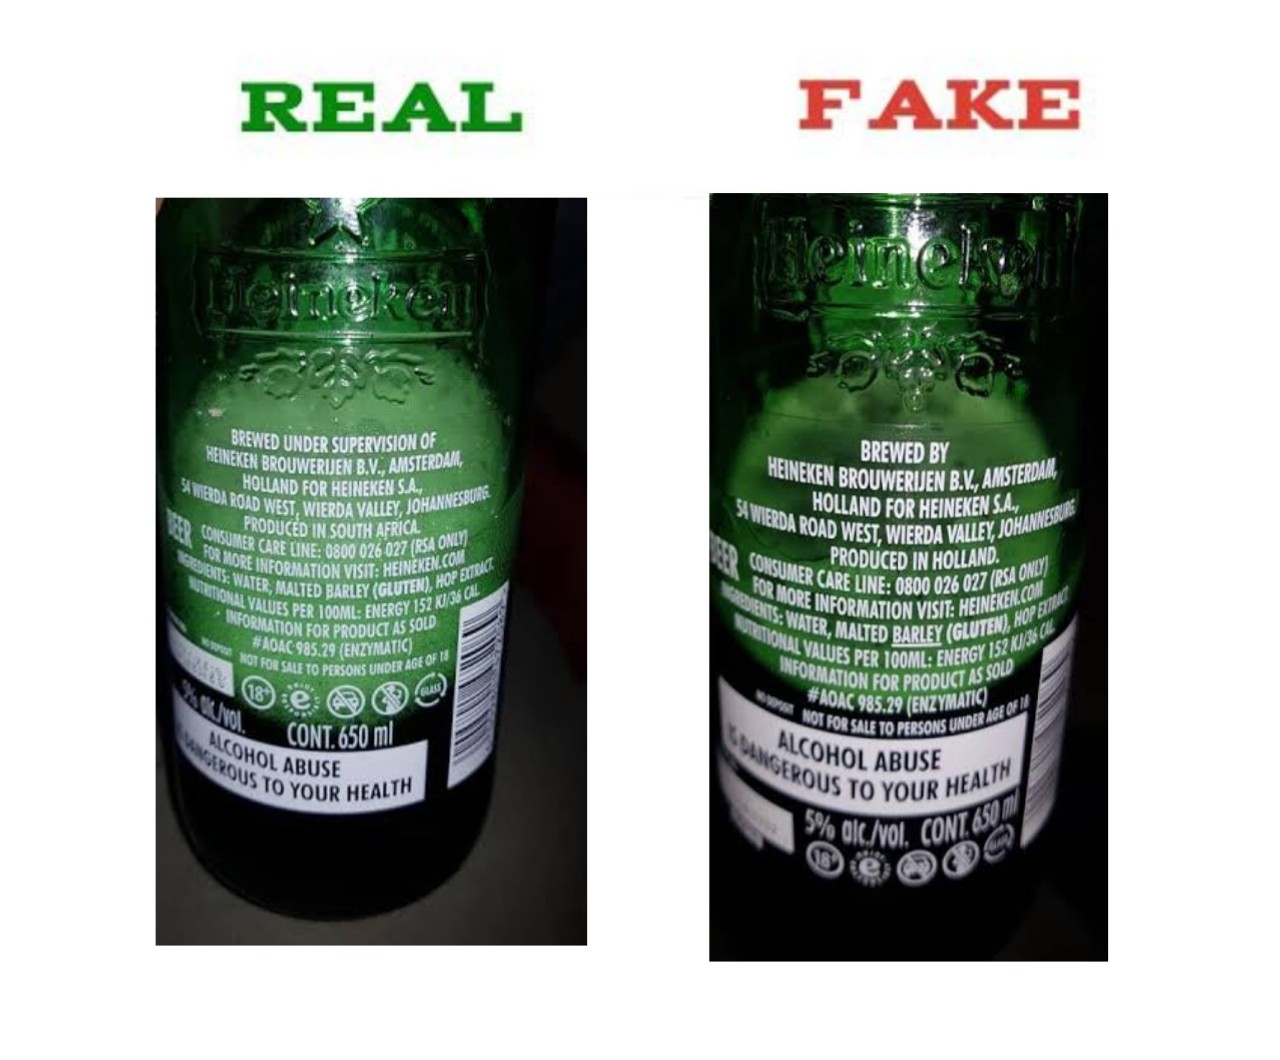 How to Spot Fake Heineken Beer